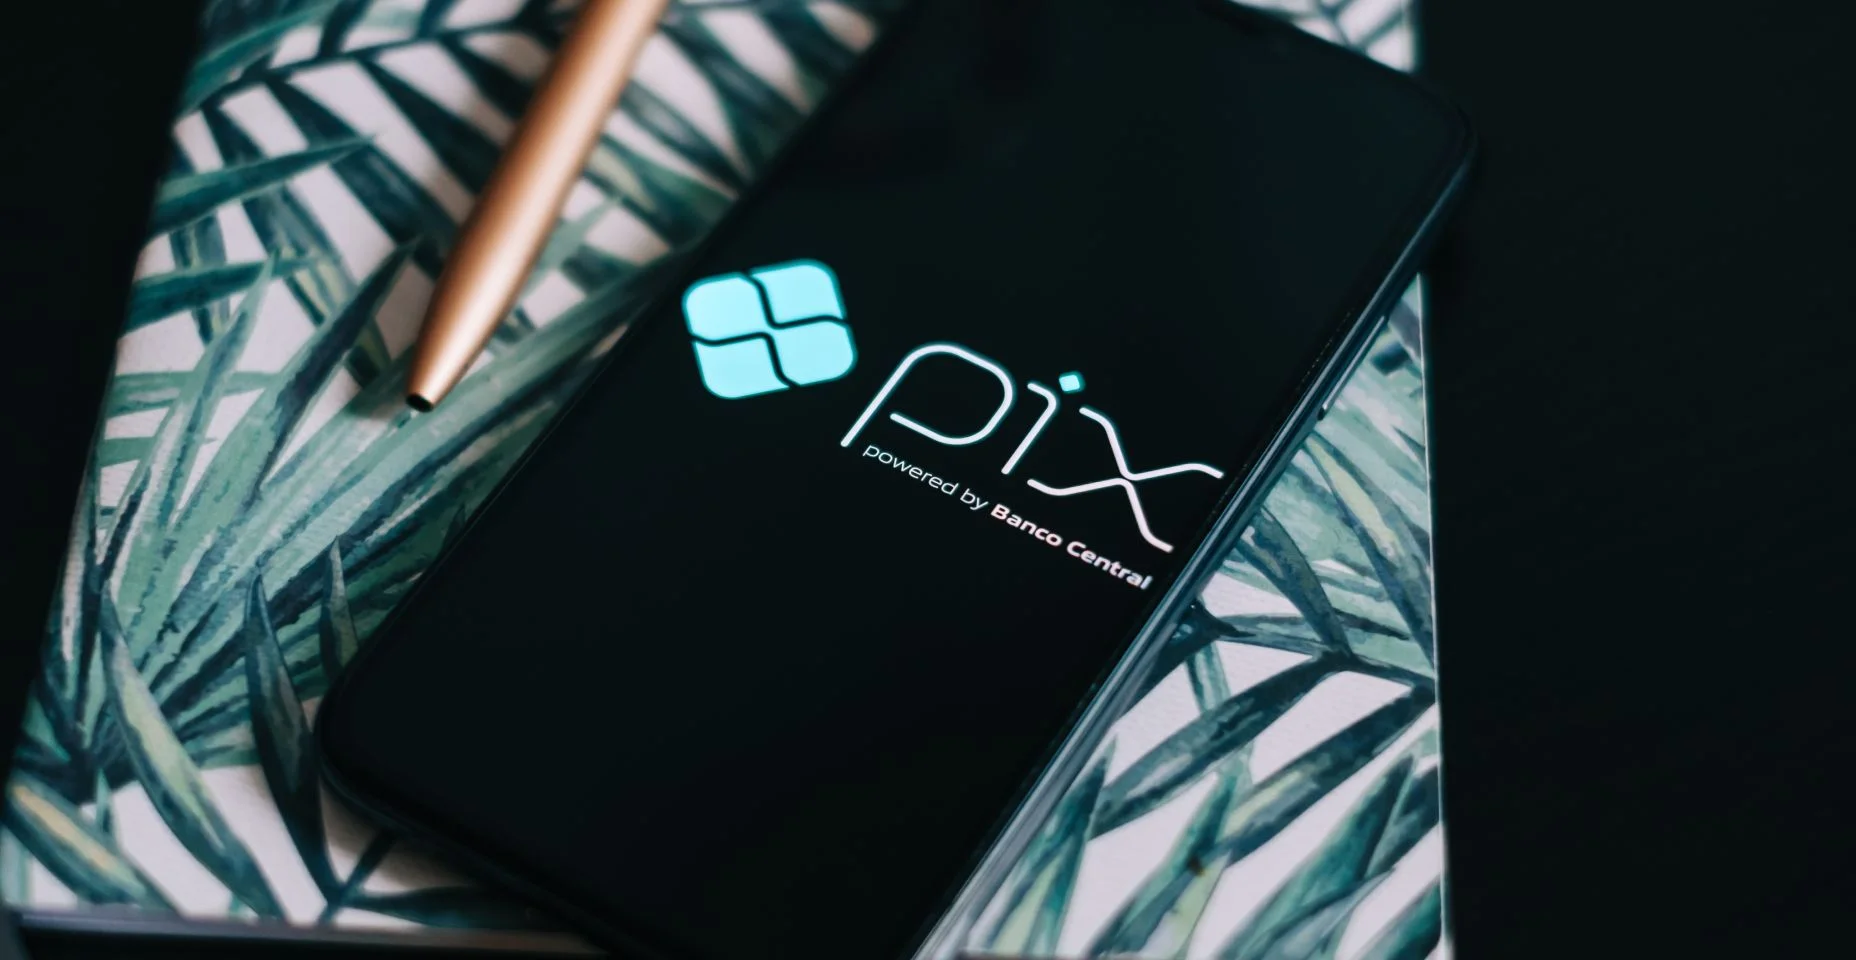 Logotipo Pix na tela do smartphone.